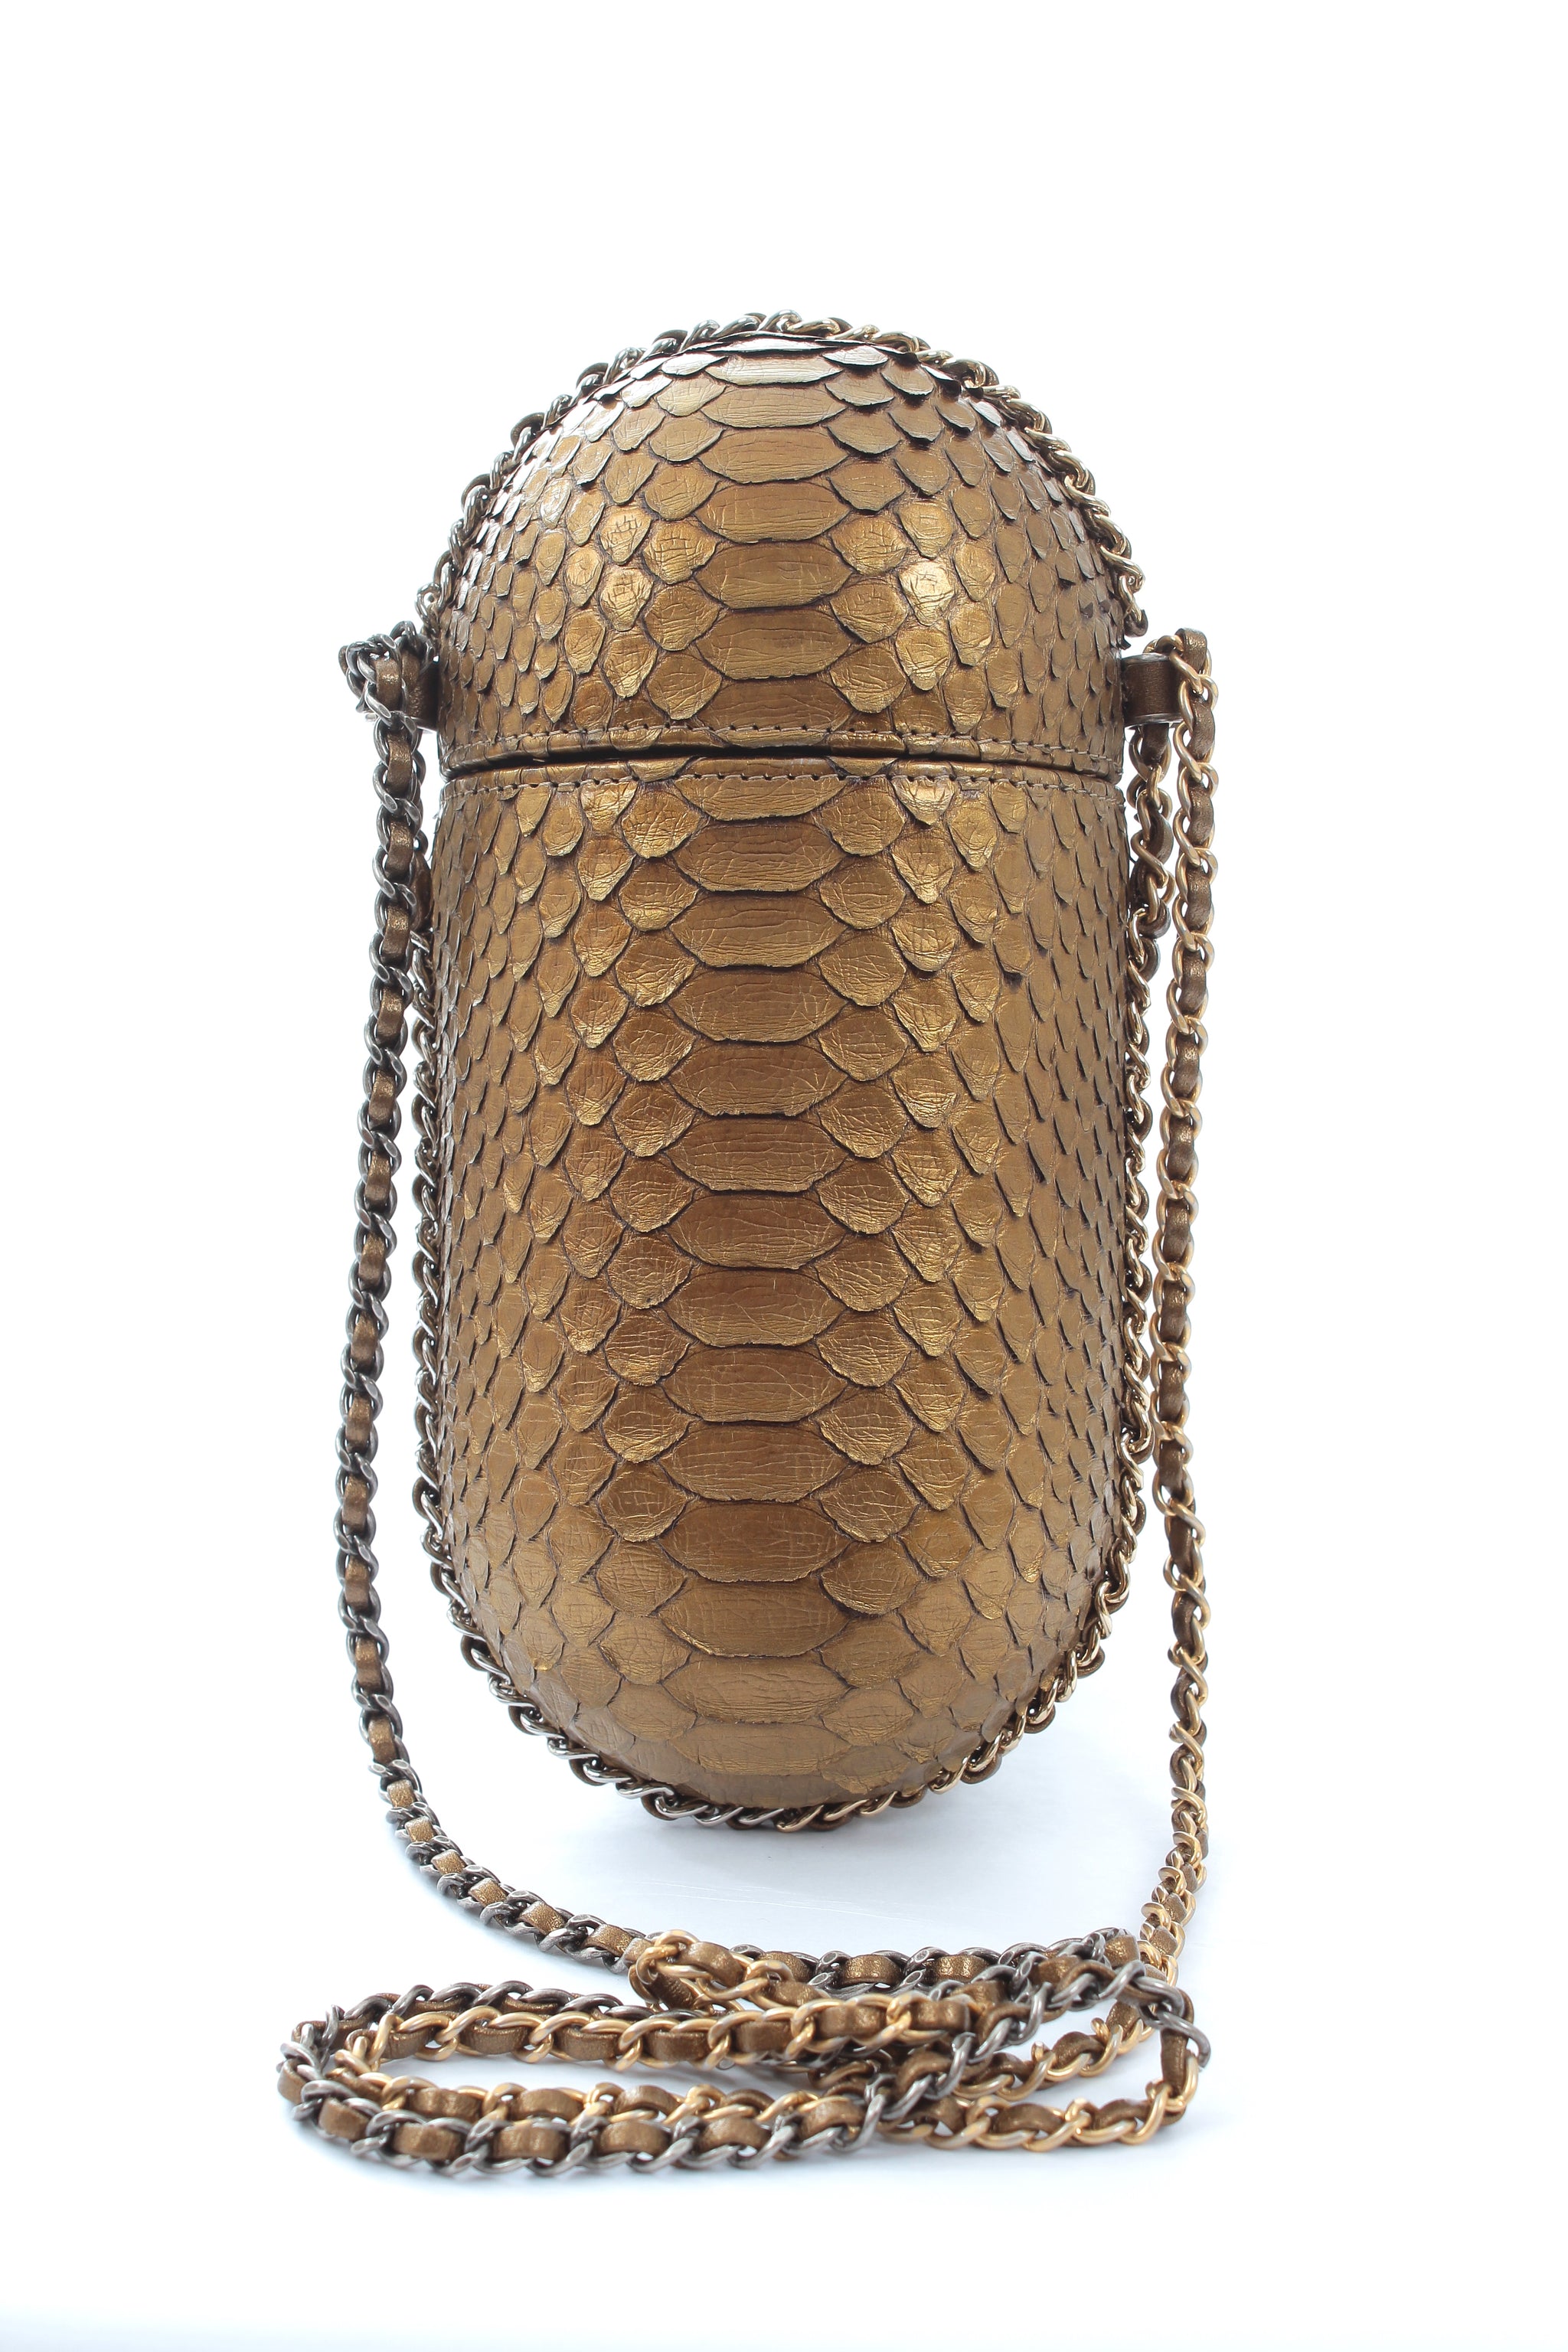 Chanel 2019 Métiers d'Art Python Evening Bag - Limited Edition Collect -  Closet Upgrade